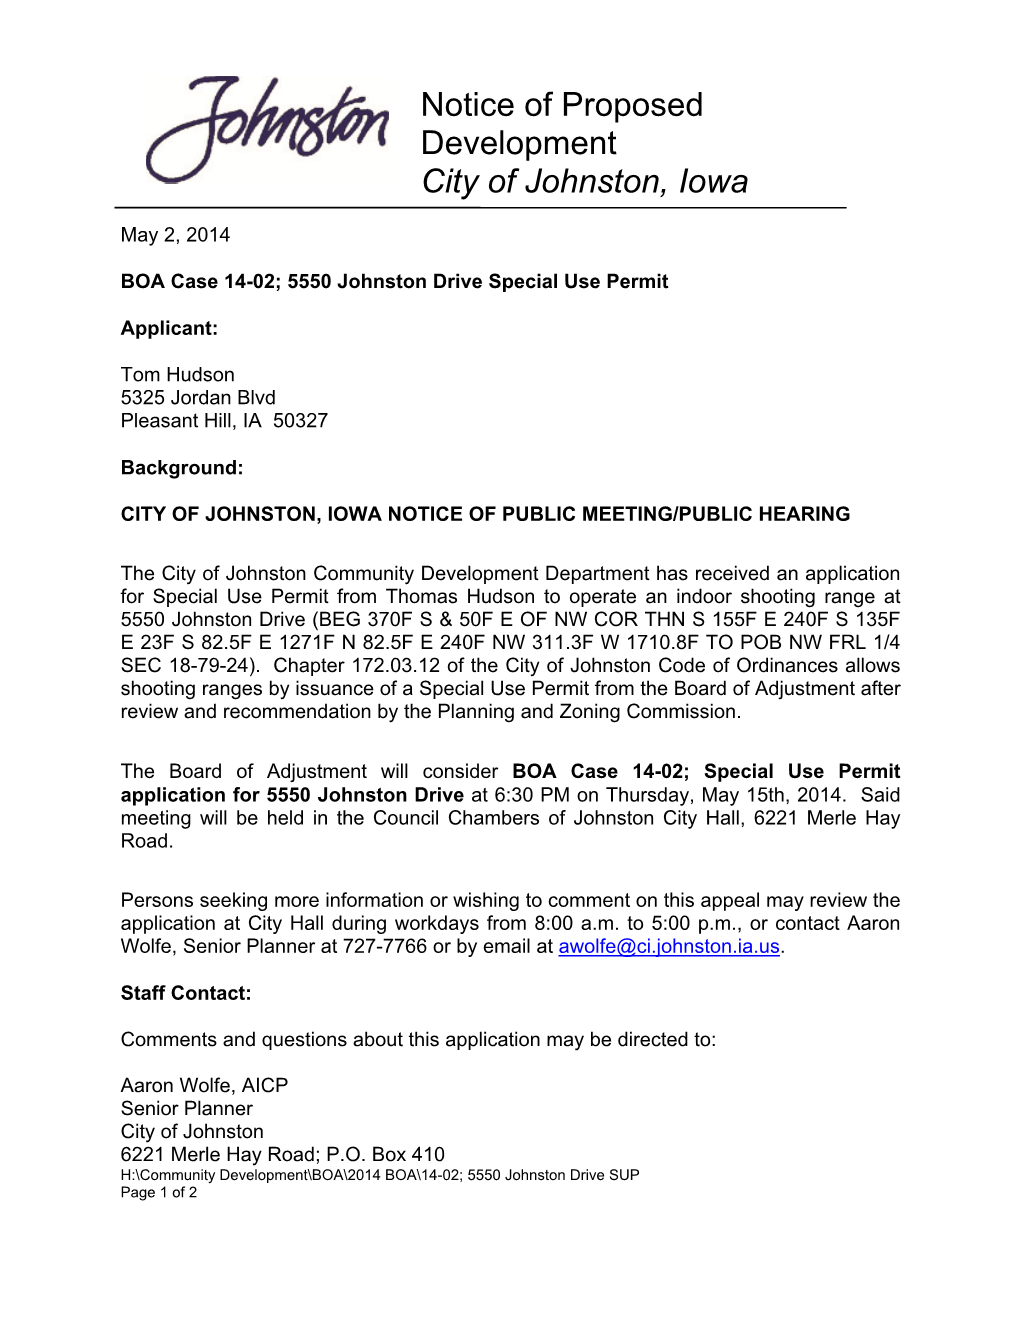 Notice of Proposed Development City of Johnston, Iowa